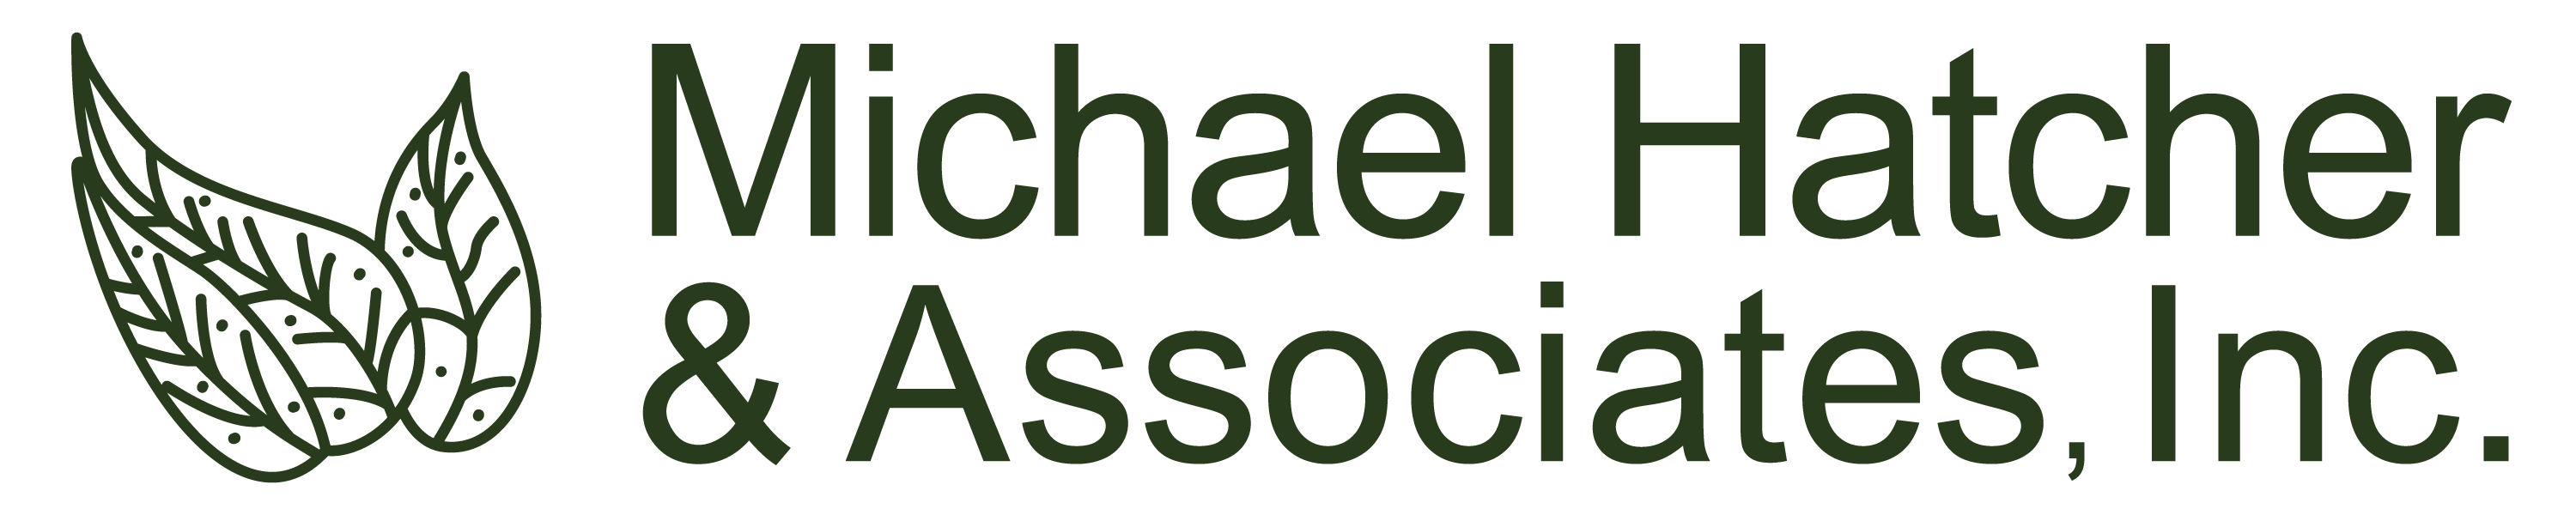 Michael Hatcher & Associates, Inc. Logo